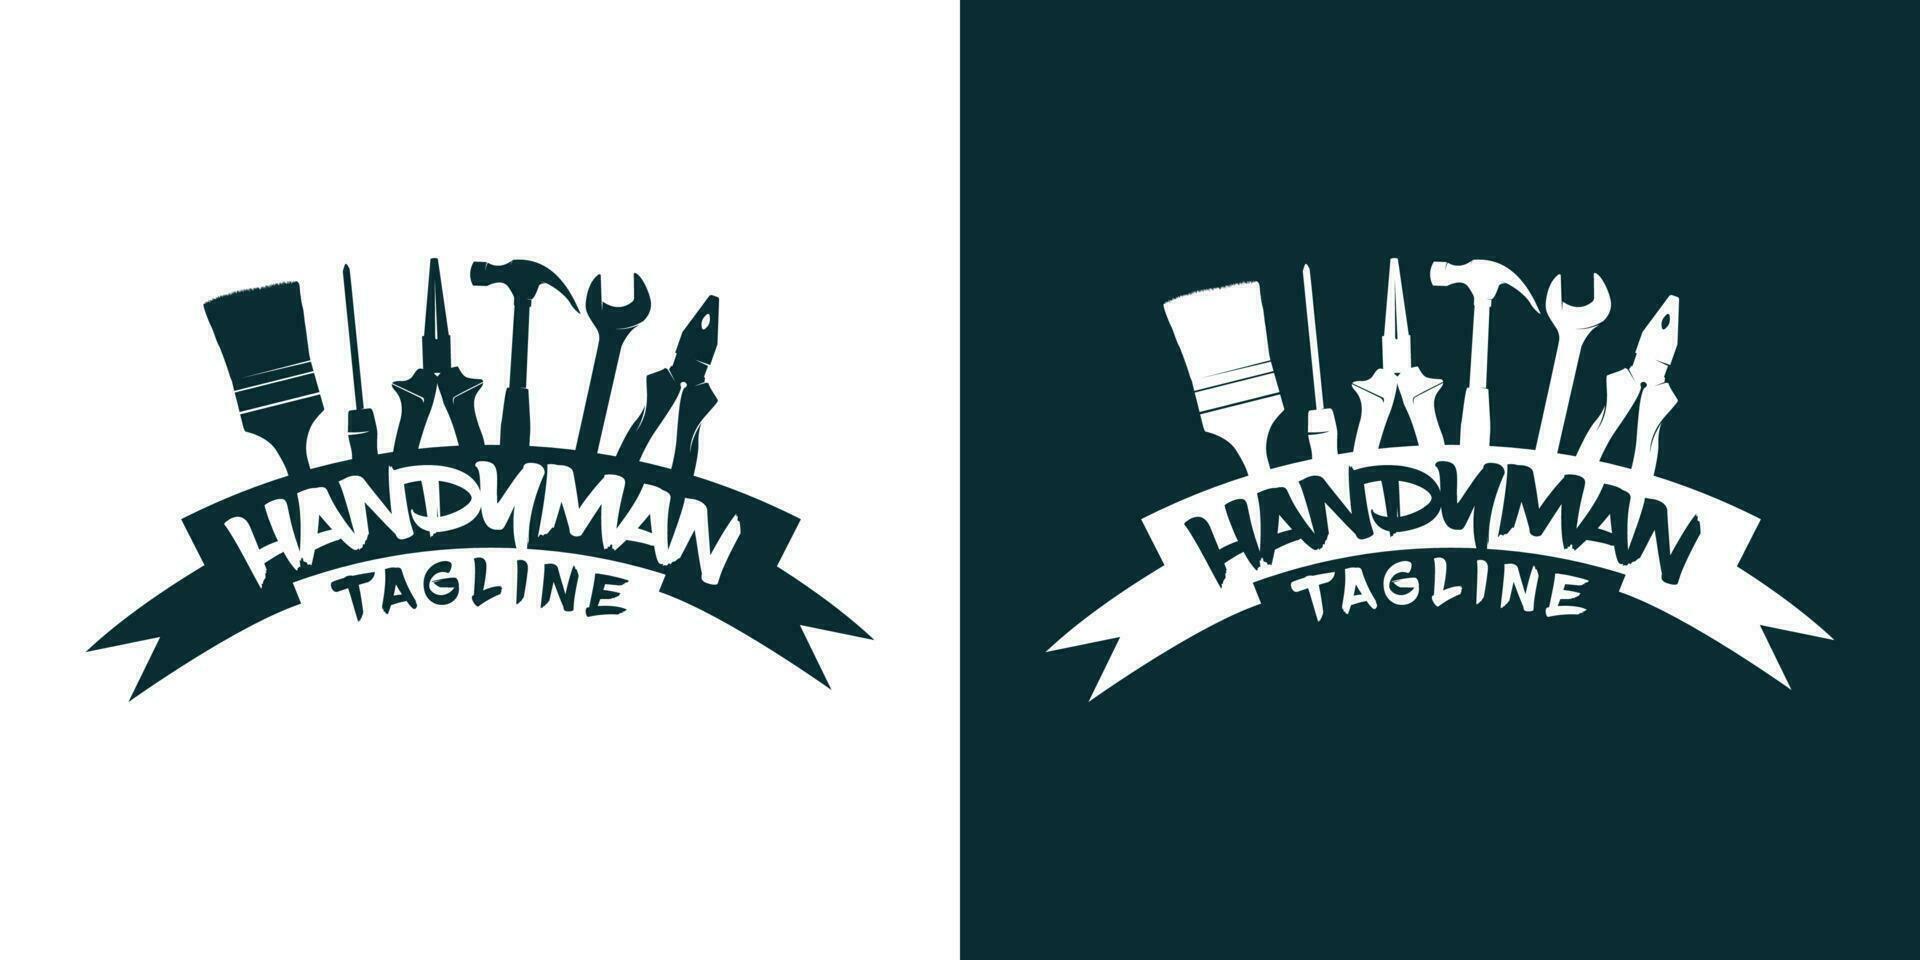 handyman logo vector containing tools and stuff